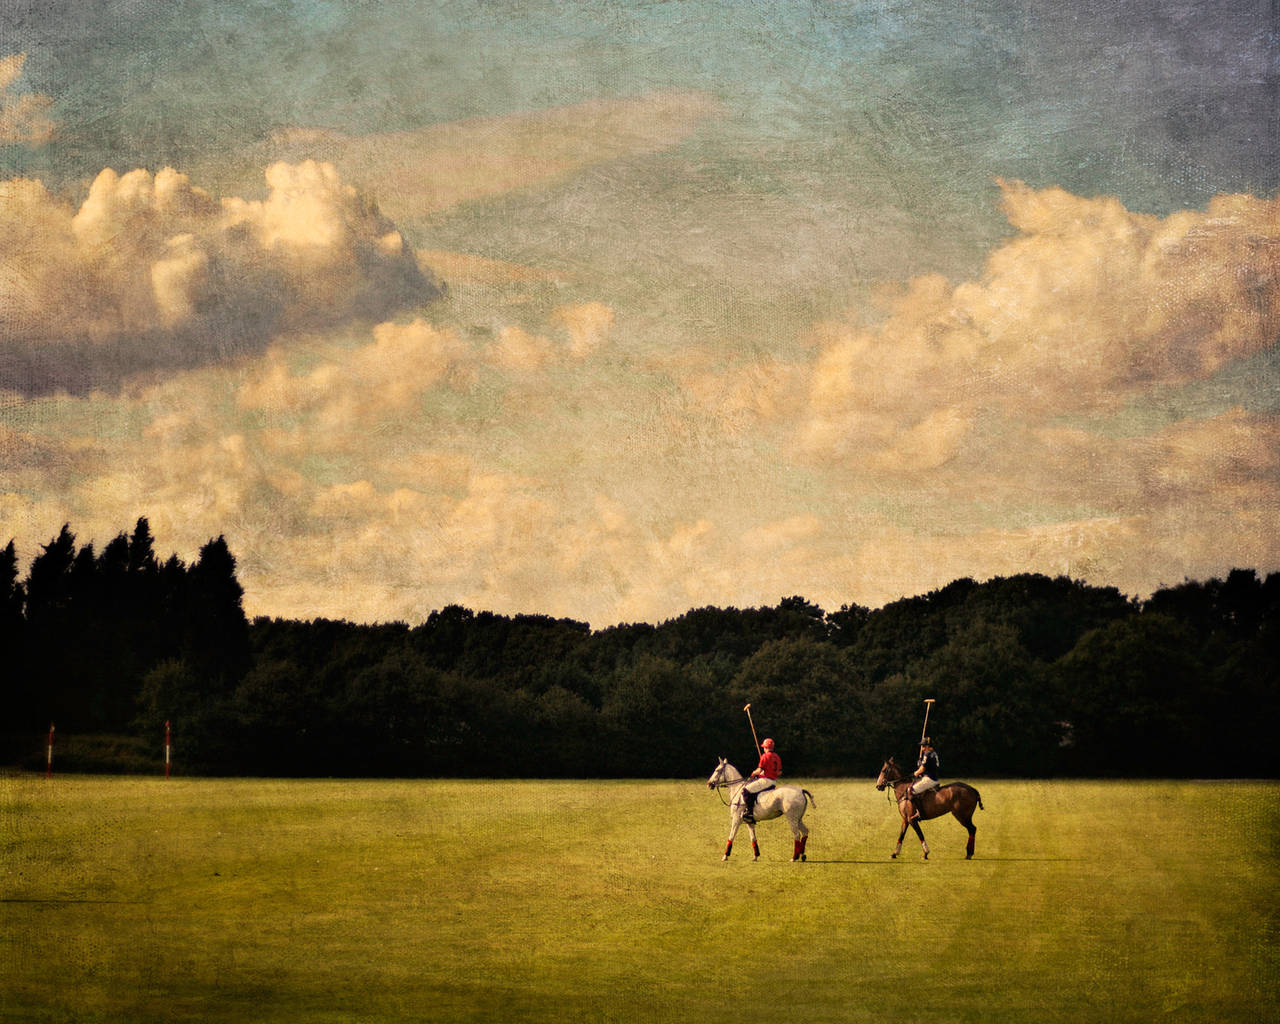 Landscape Photograph Pete Kelly - Polo Field, Cheshire, Royaume-Uni